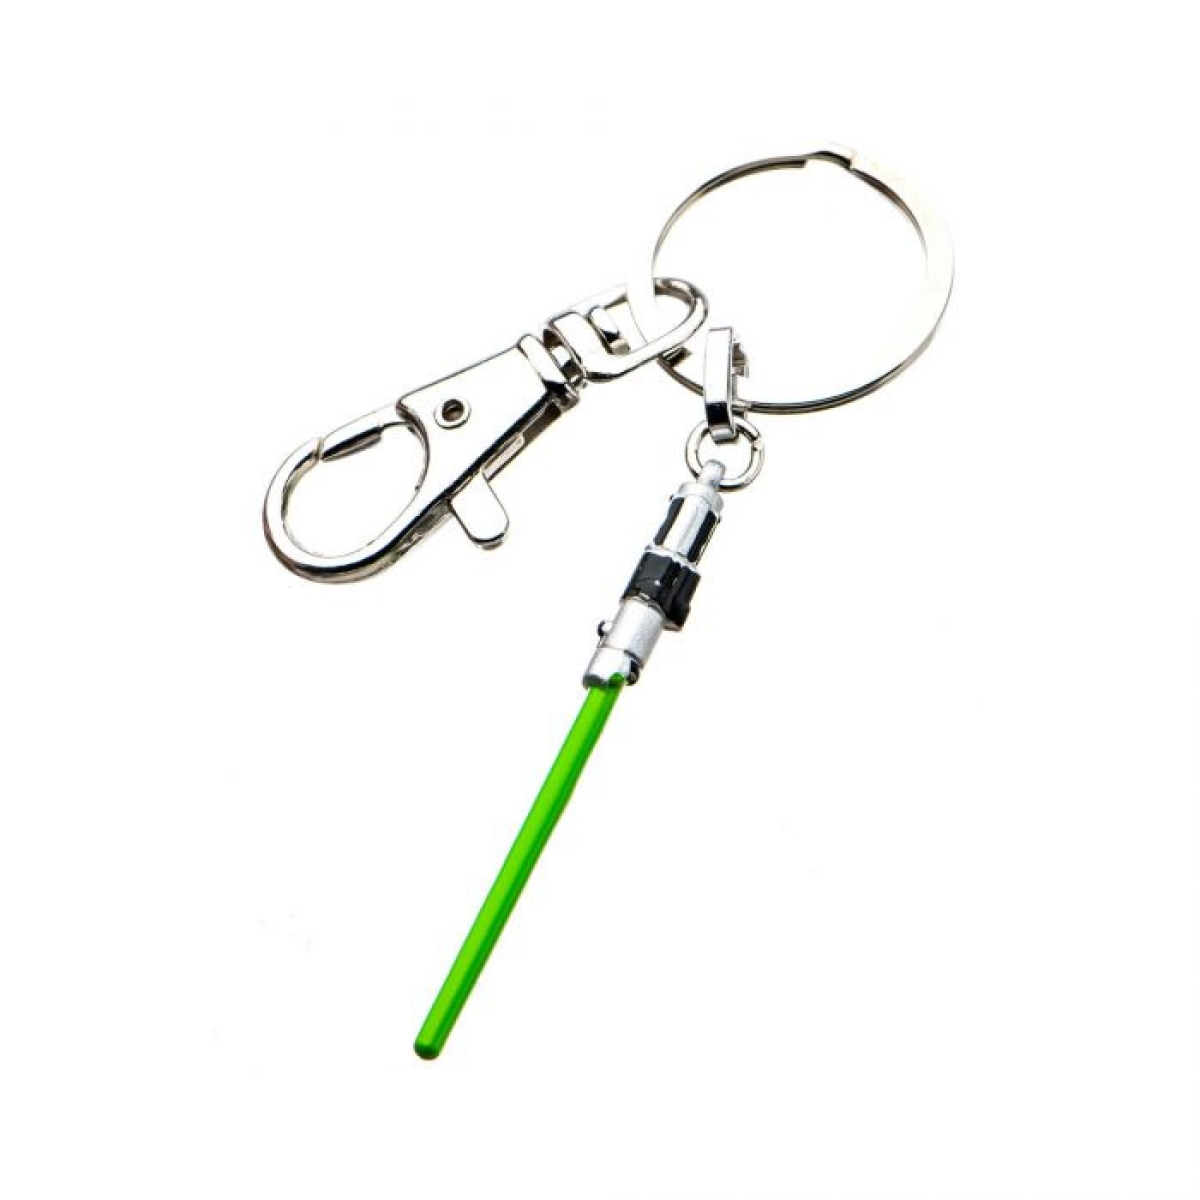 Picture of Star Wars 830703 Star Wars Luke Skywalker Lightsaber Keychain